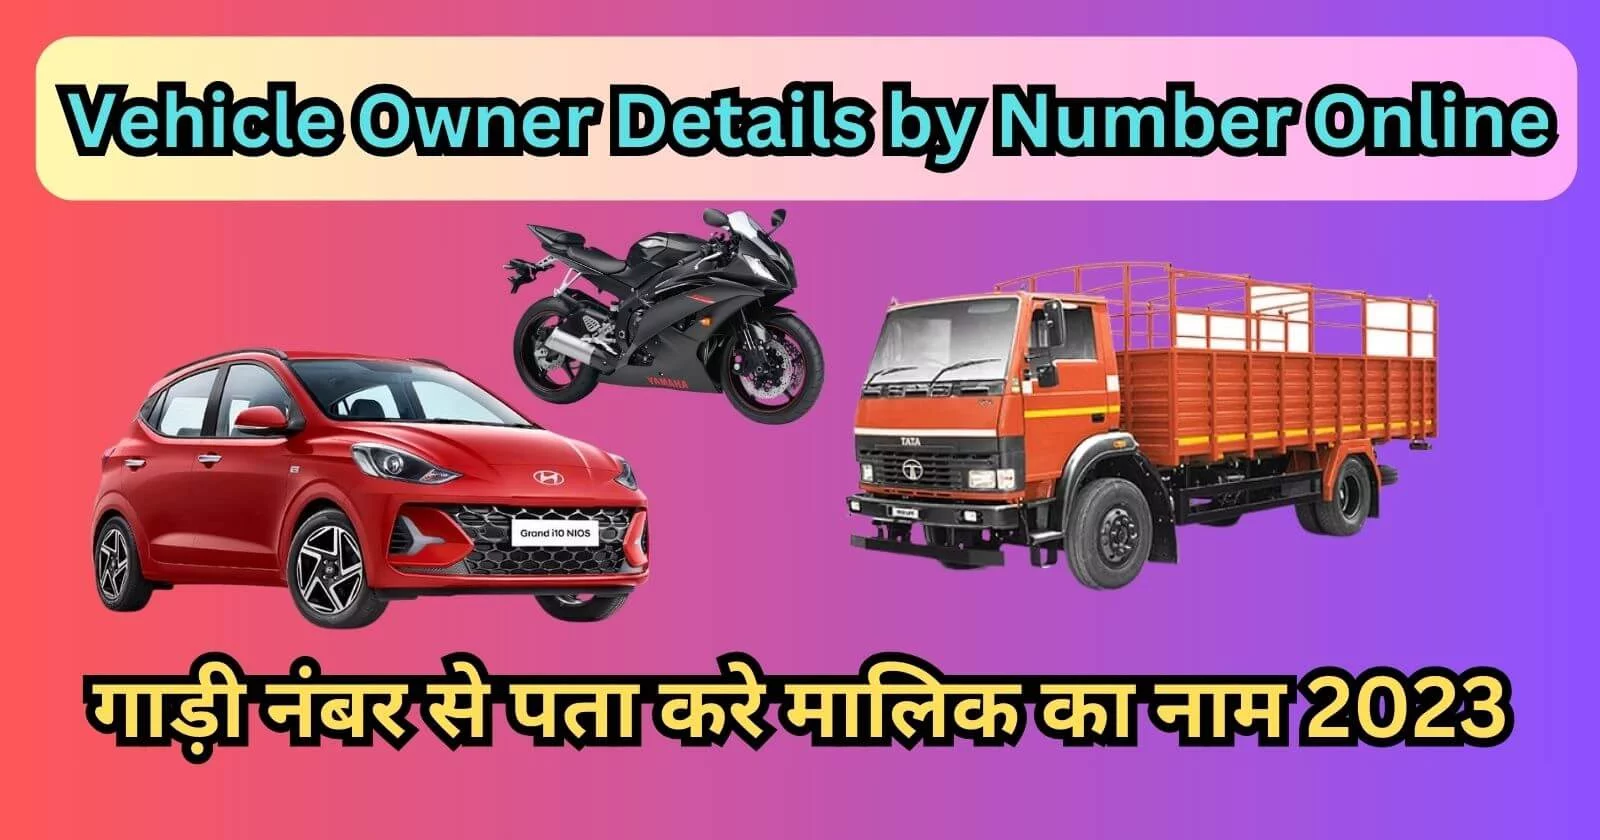 Vehicle Owner Details by Number Online